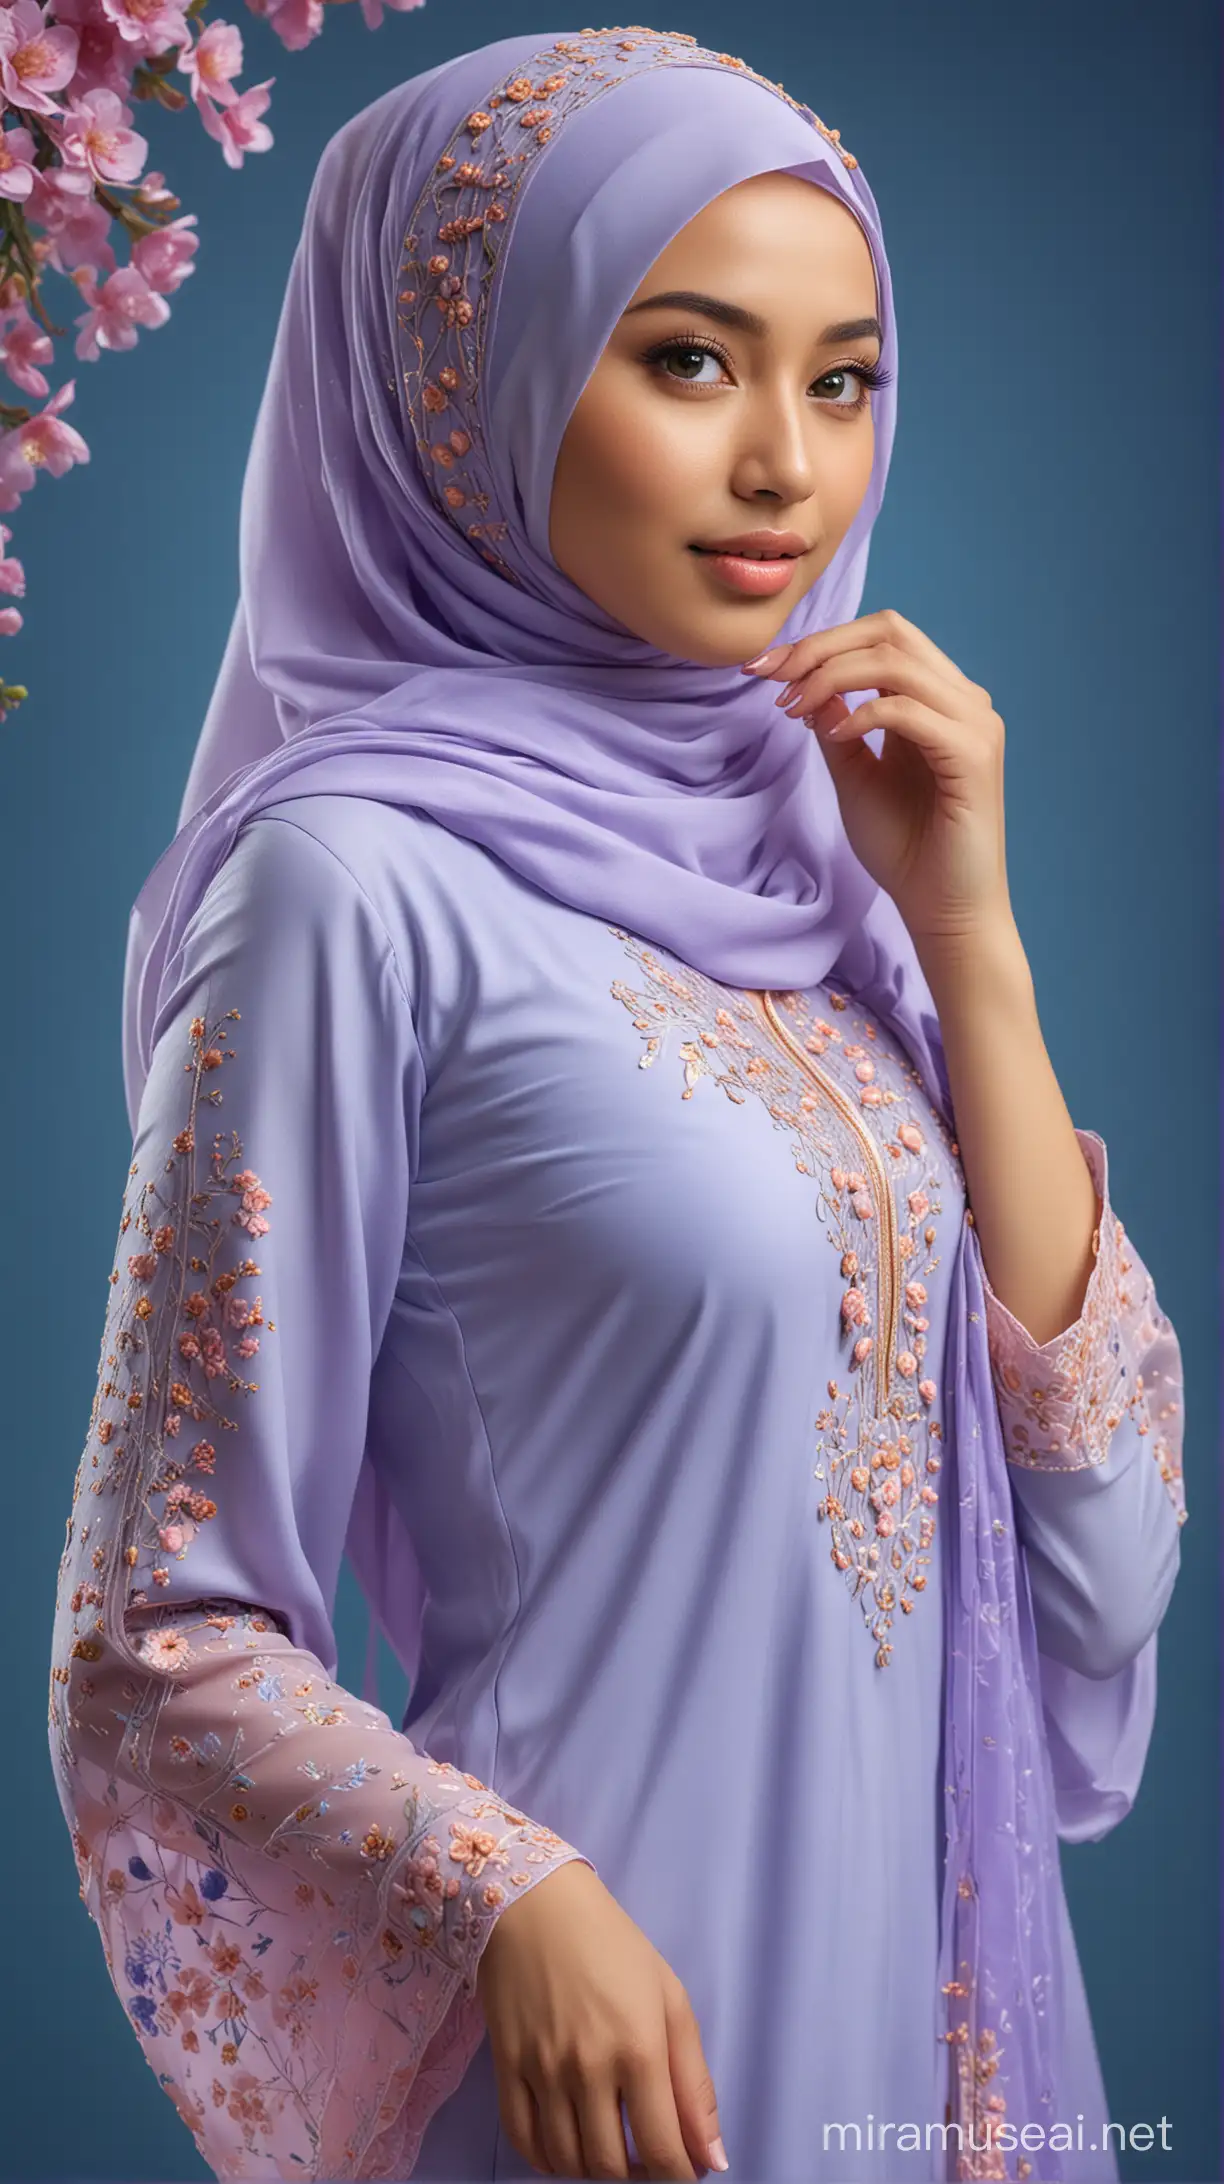 Malaysian Female Model in Lavender and Peach Baju Kurung Fully Hijab Dynamic Shot